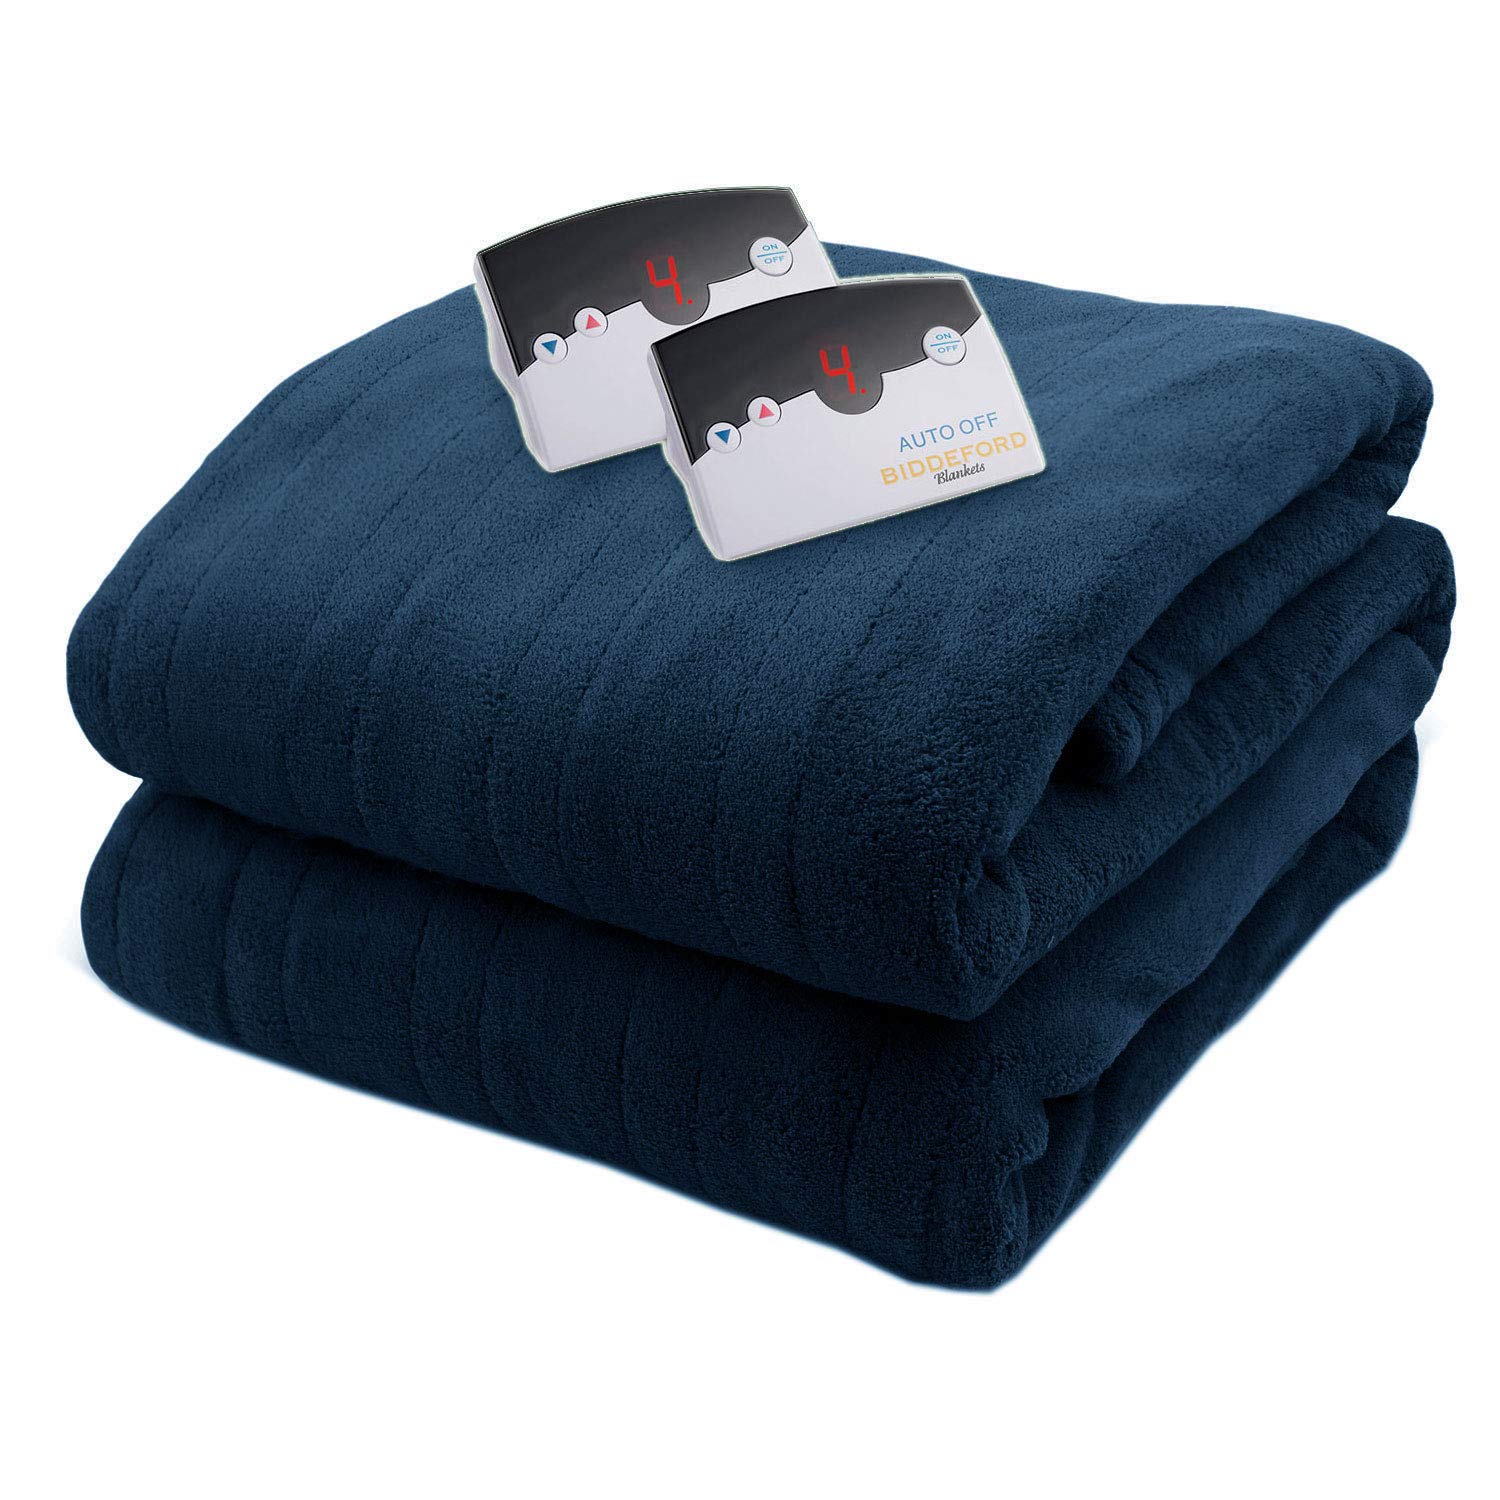 Biddeford 2033-905191-544 MicroPlush Electric Heated Blanket Queen Navy Blue - Heated Blankets